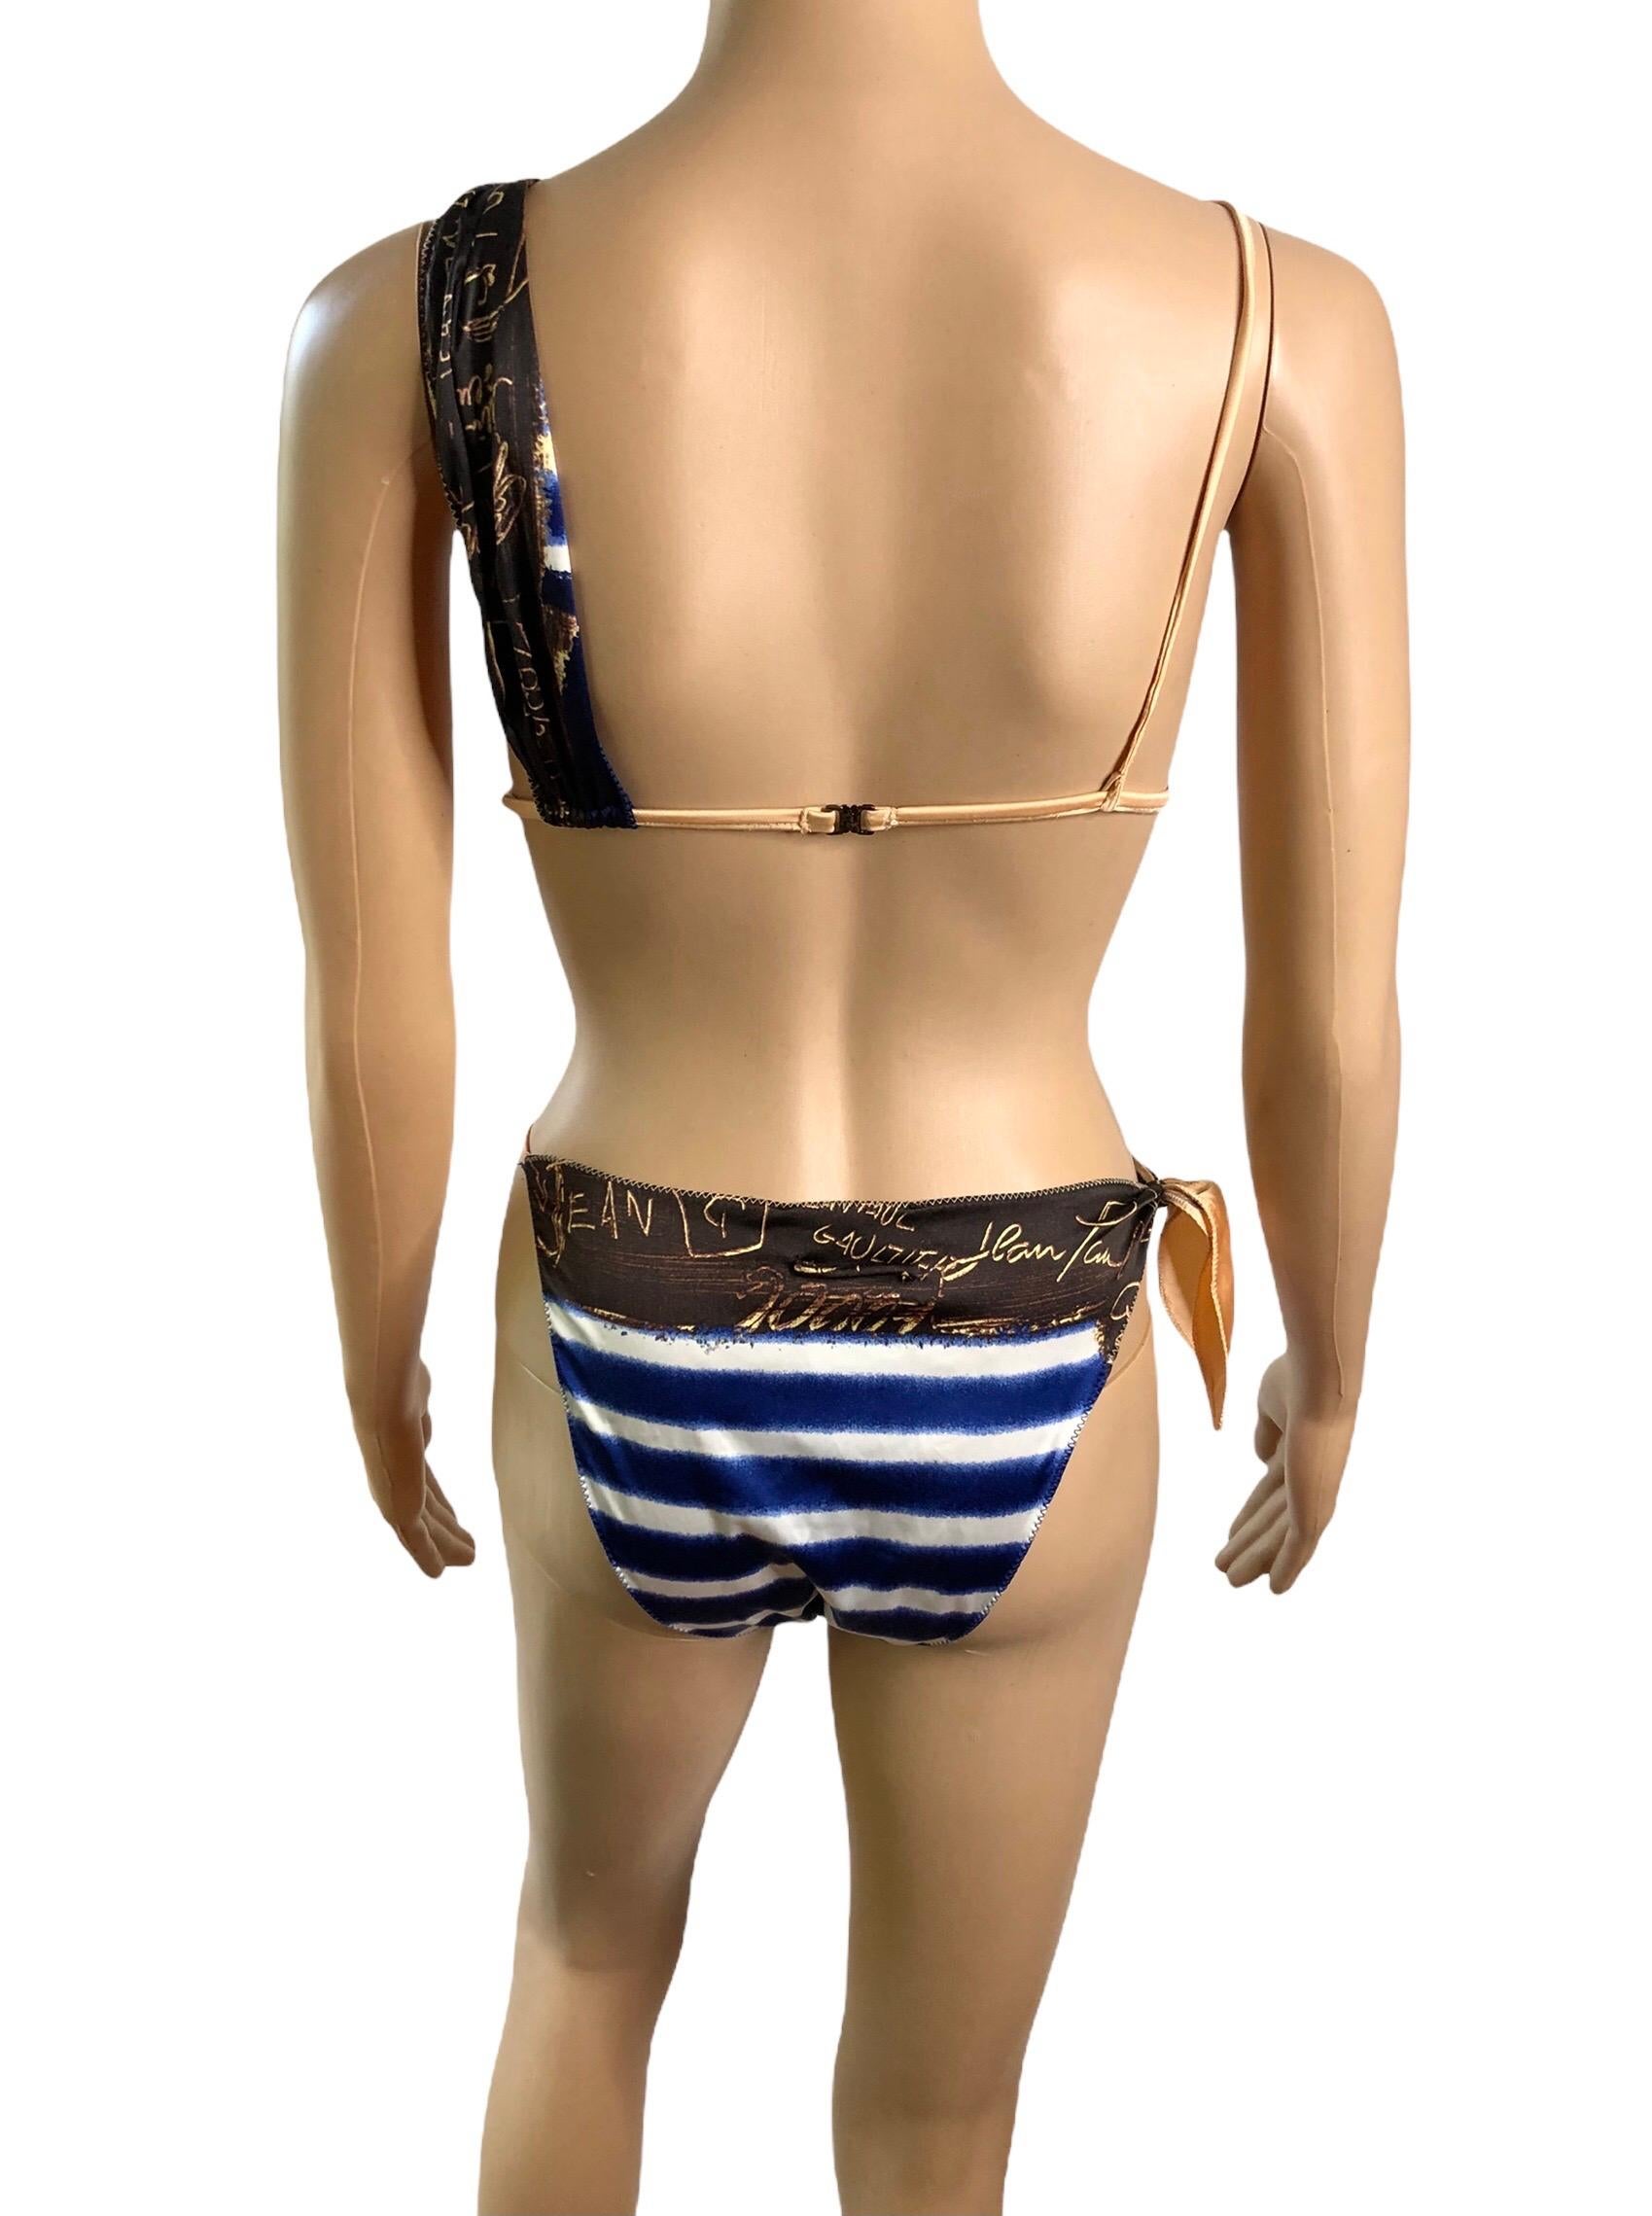 Jean Paul Gaultier c.2001 Graffiti Print Stripes Bikini Swimwear Swimsuit 2 Piece Set Size M


